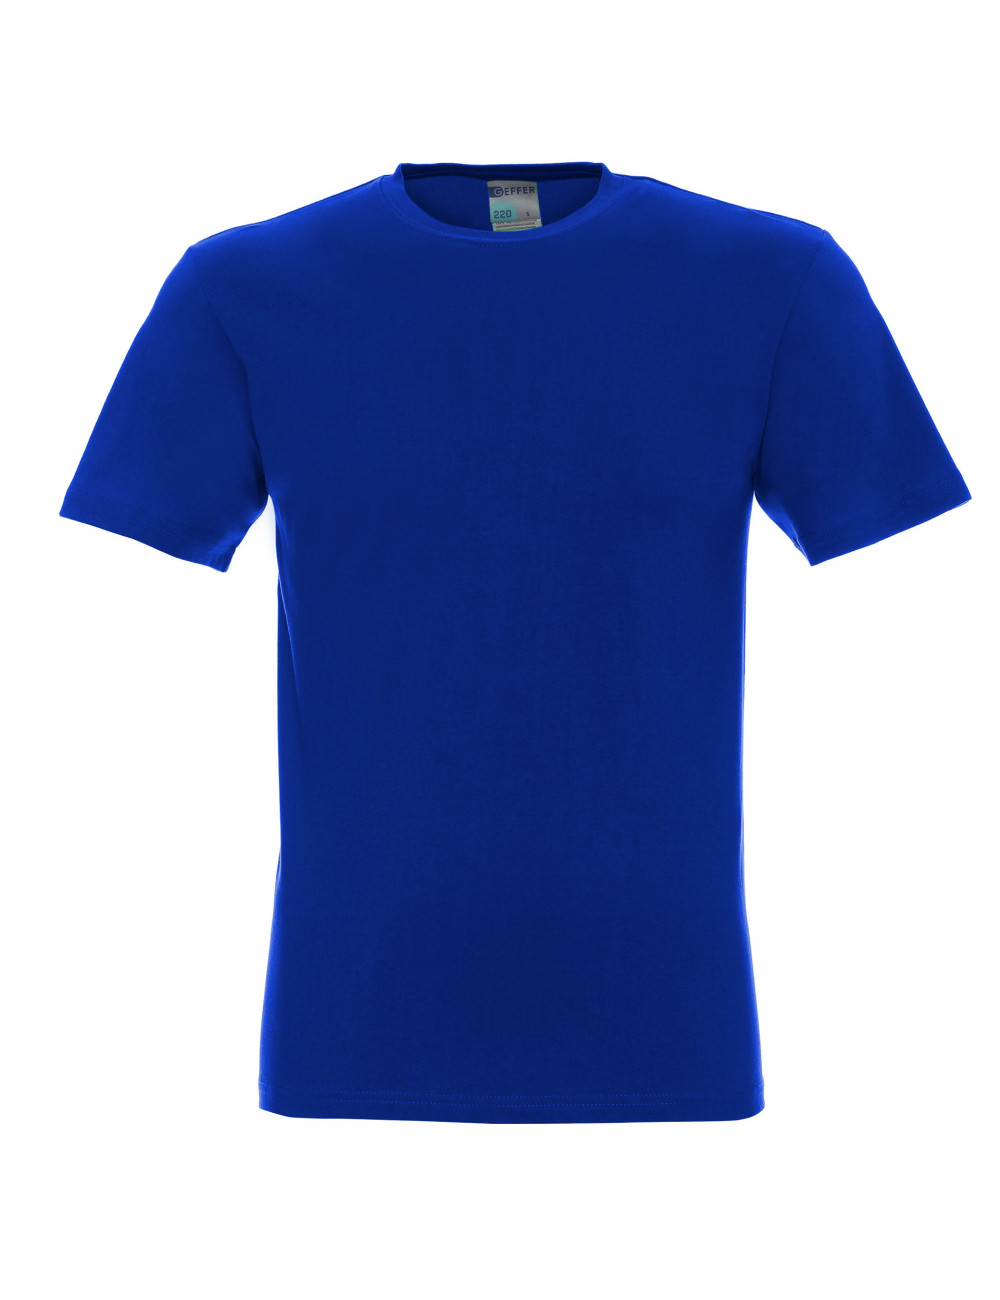 Herren T-Shirt 200 Kornblumenblau Geffer